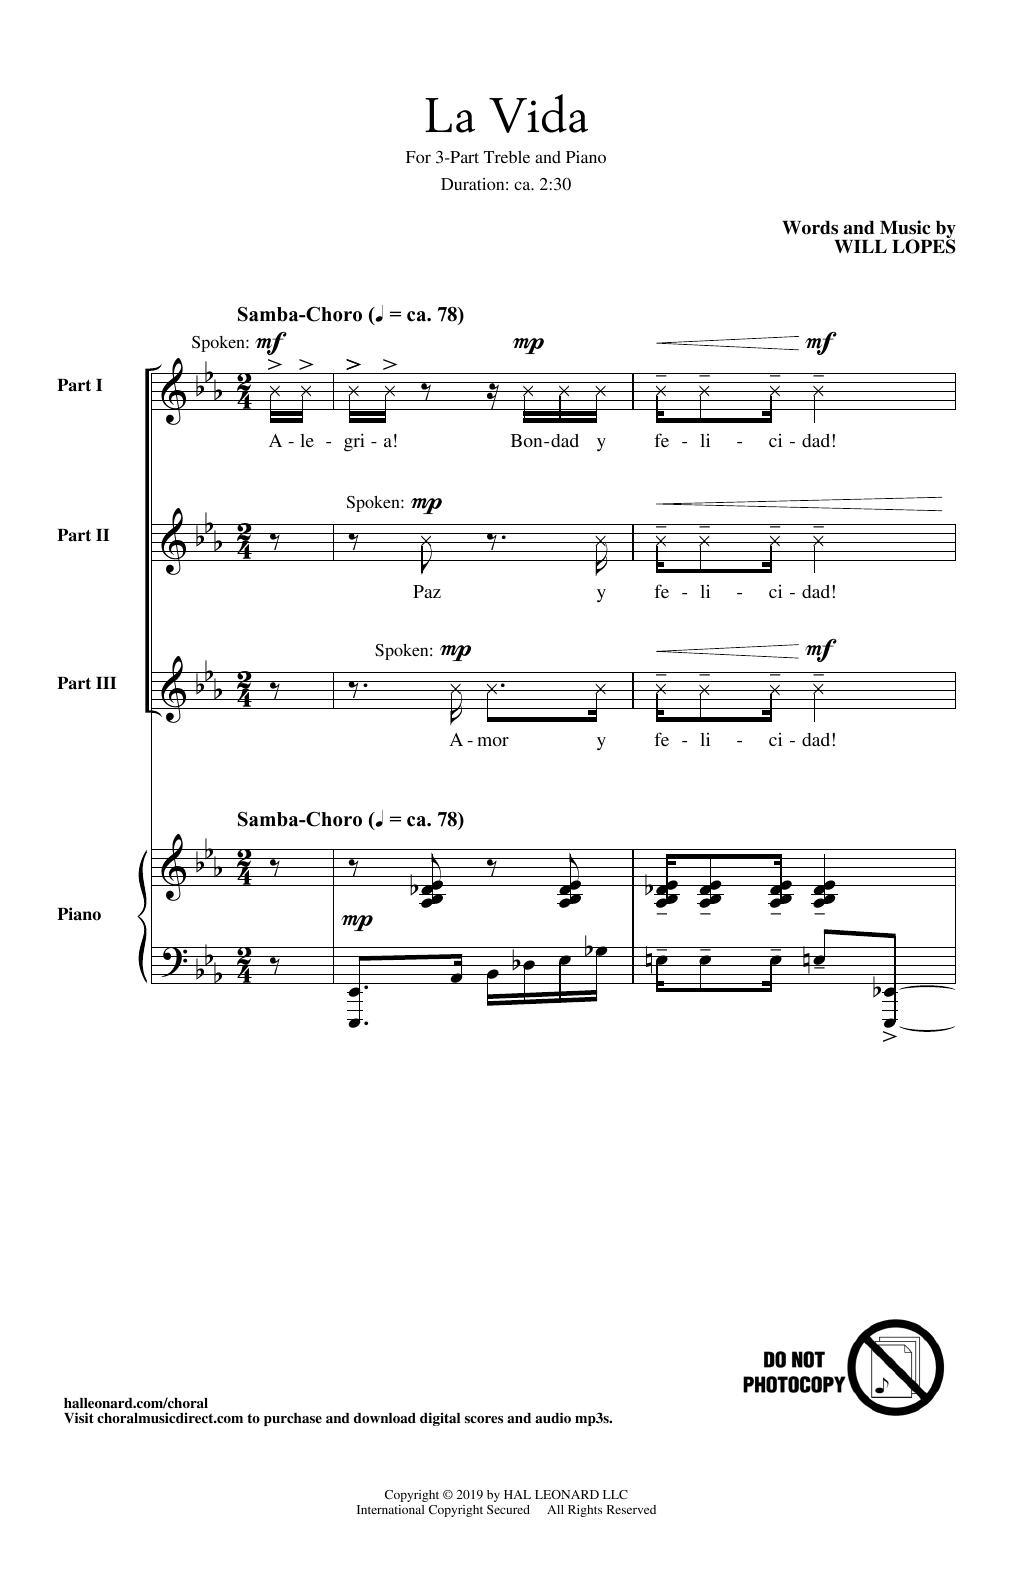 Will Lopes La Vida Sheet Music Notes & Chords for 3-Part Treble Choir - Download or Print PDF